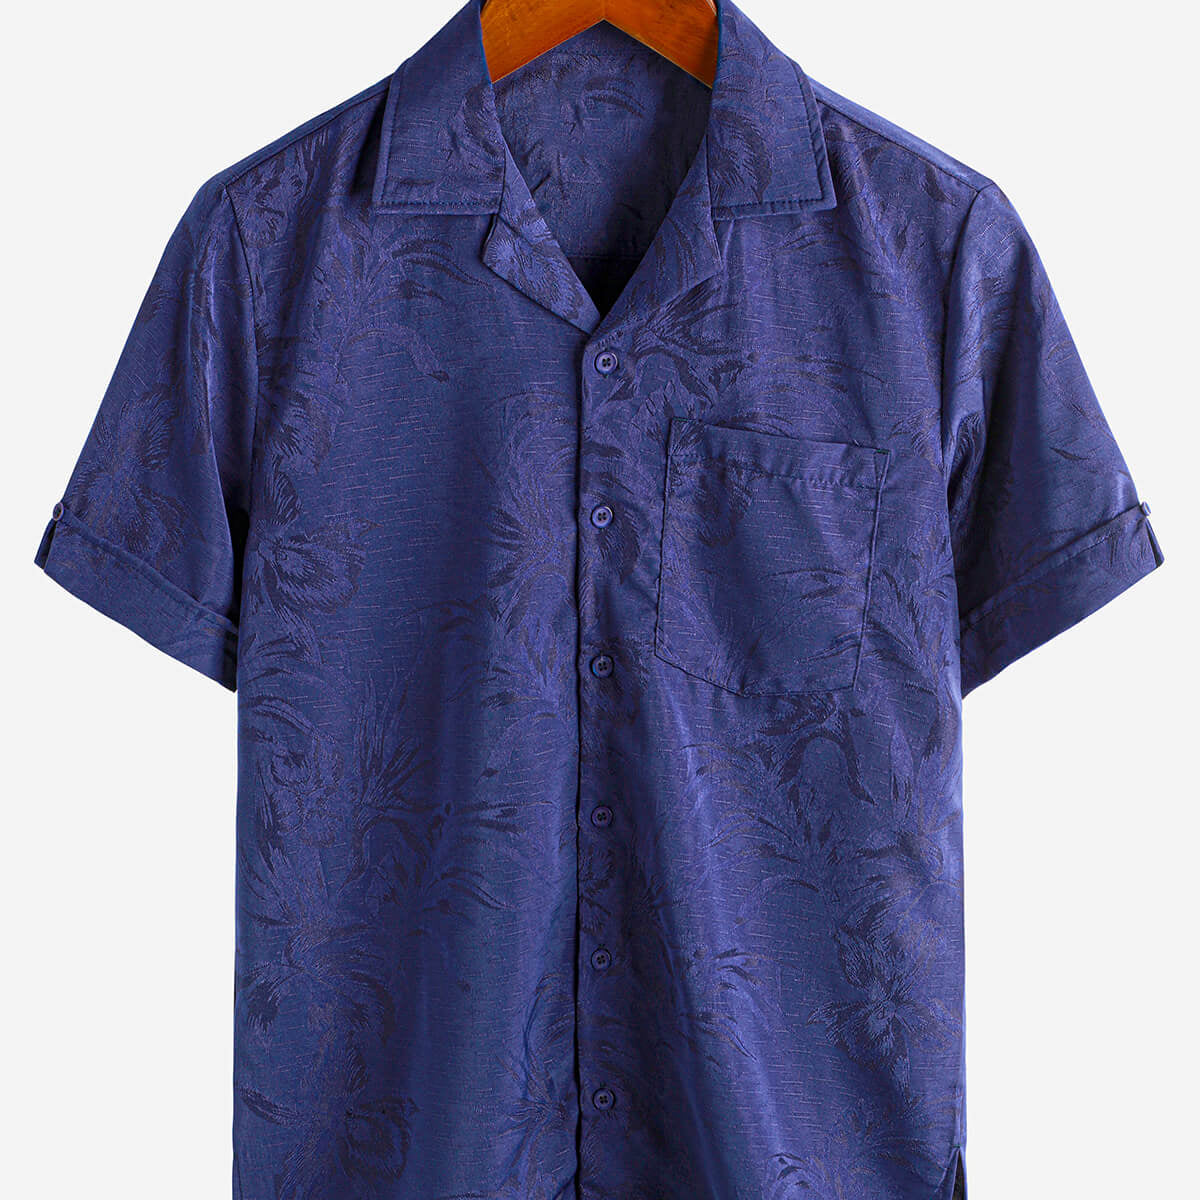 Men's Hawaiian Floral Pocket Jacquard Button Up Short Sleeve Summer Cuban Collar Camp Shirt